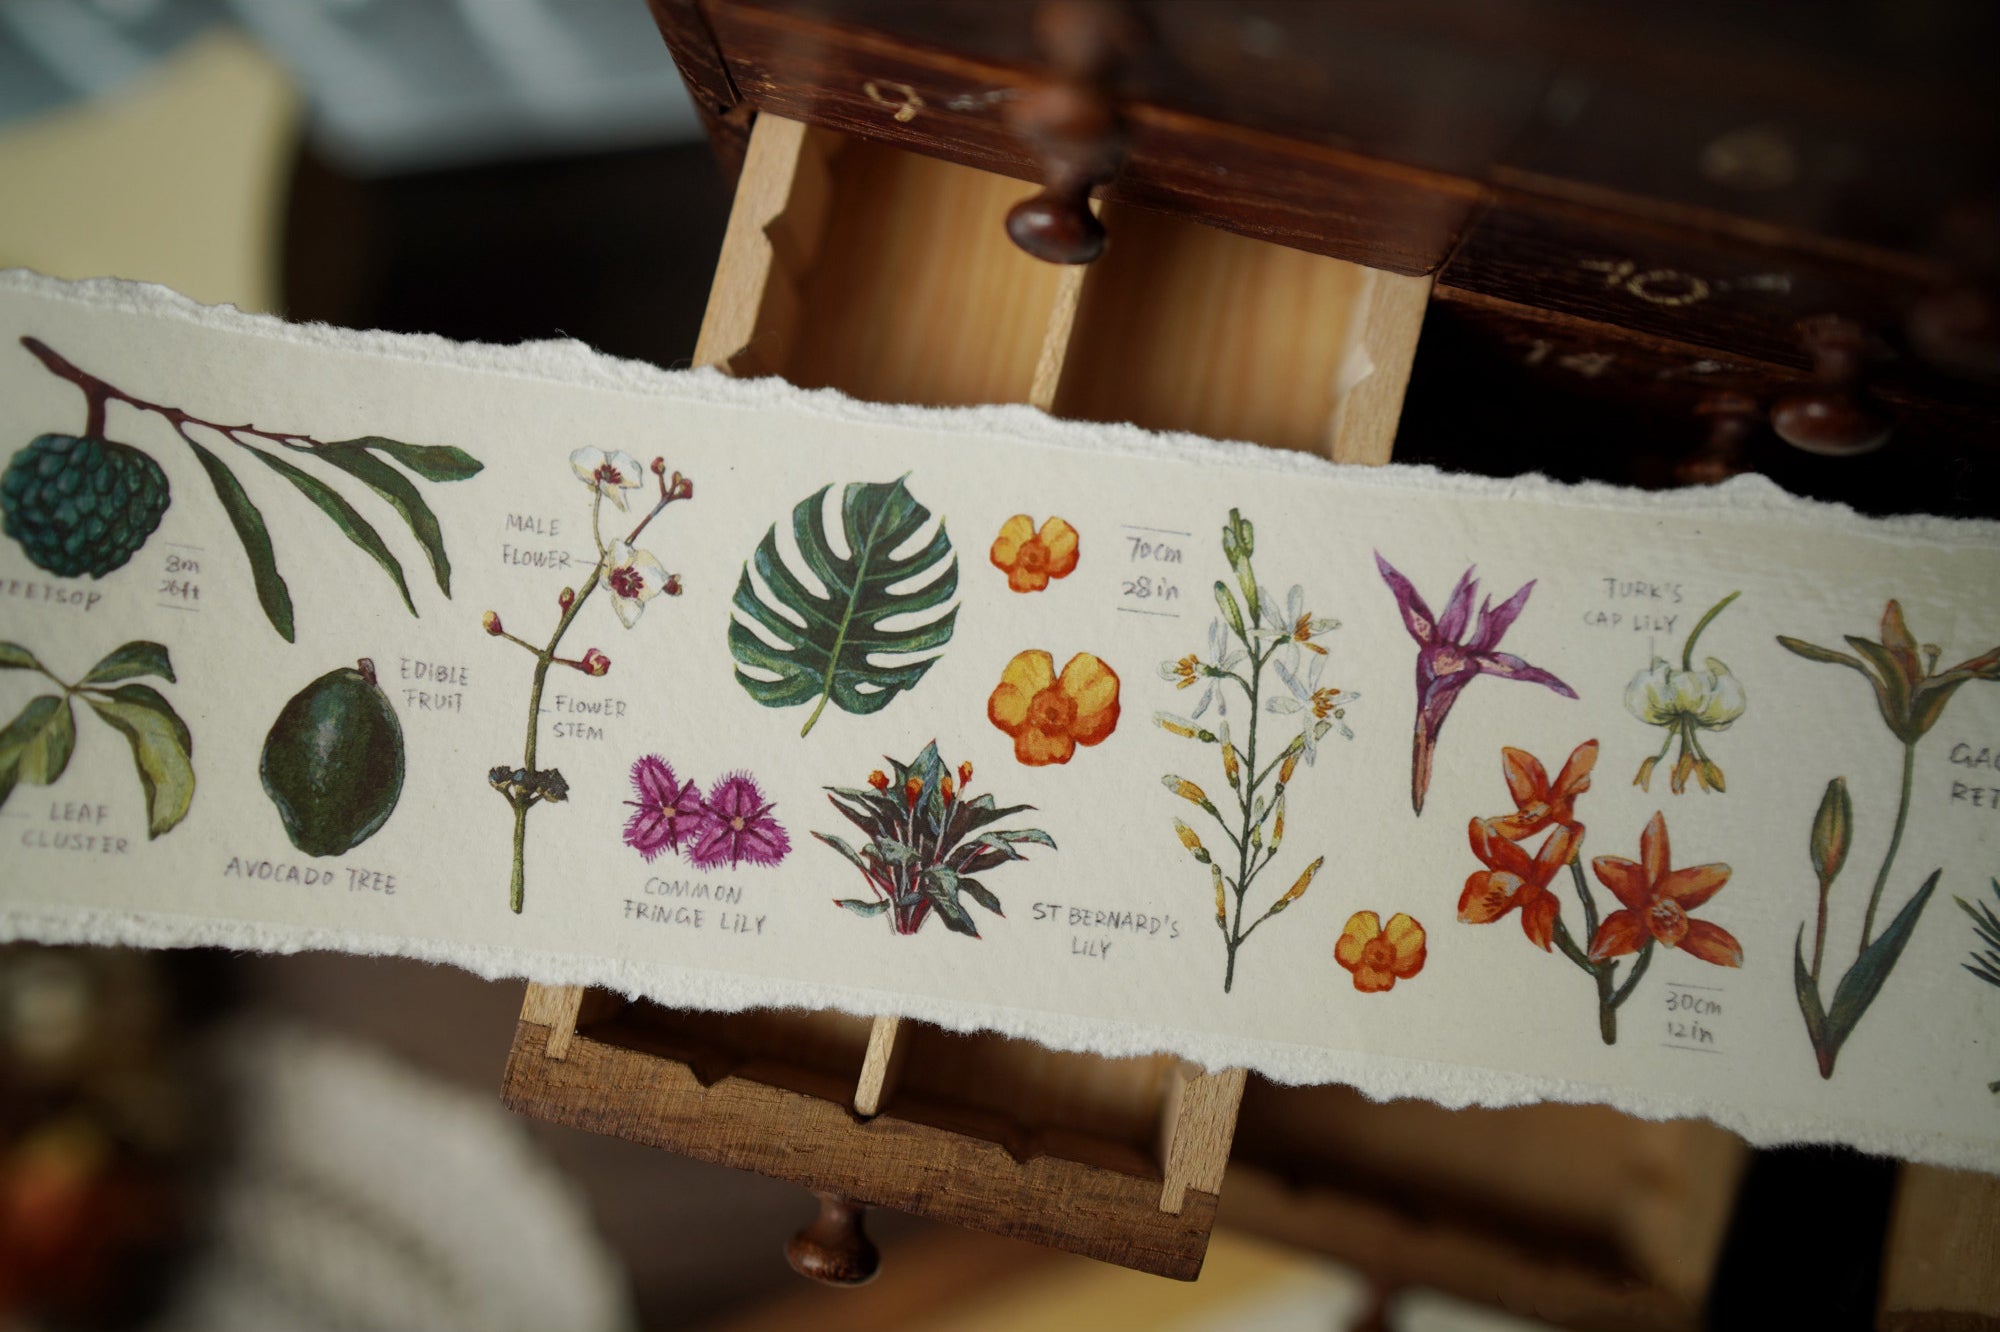 Benchu Studio Tape Sample: Botanist Series